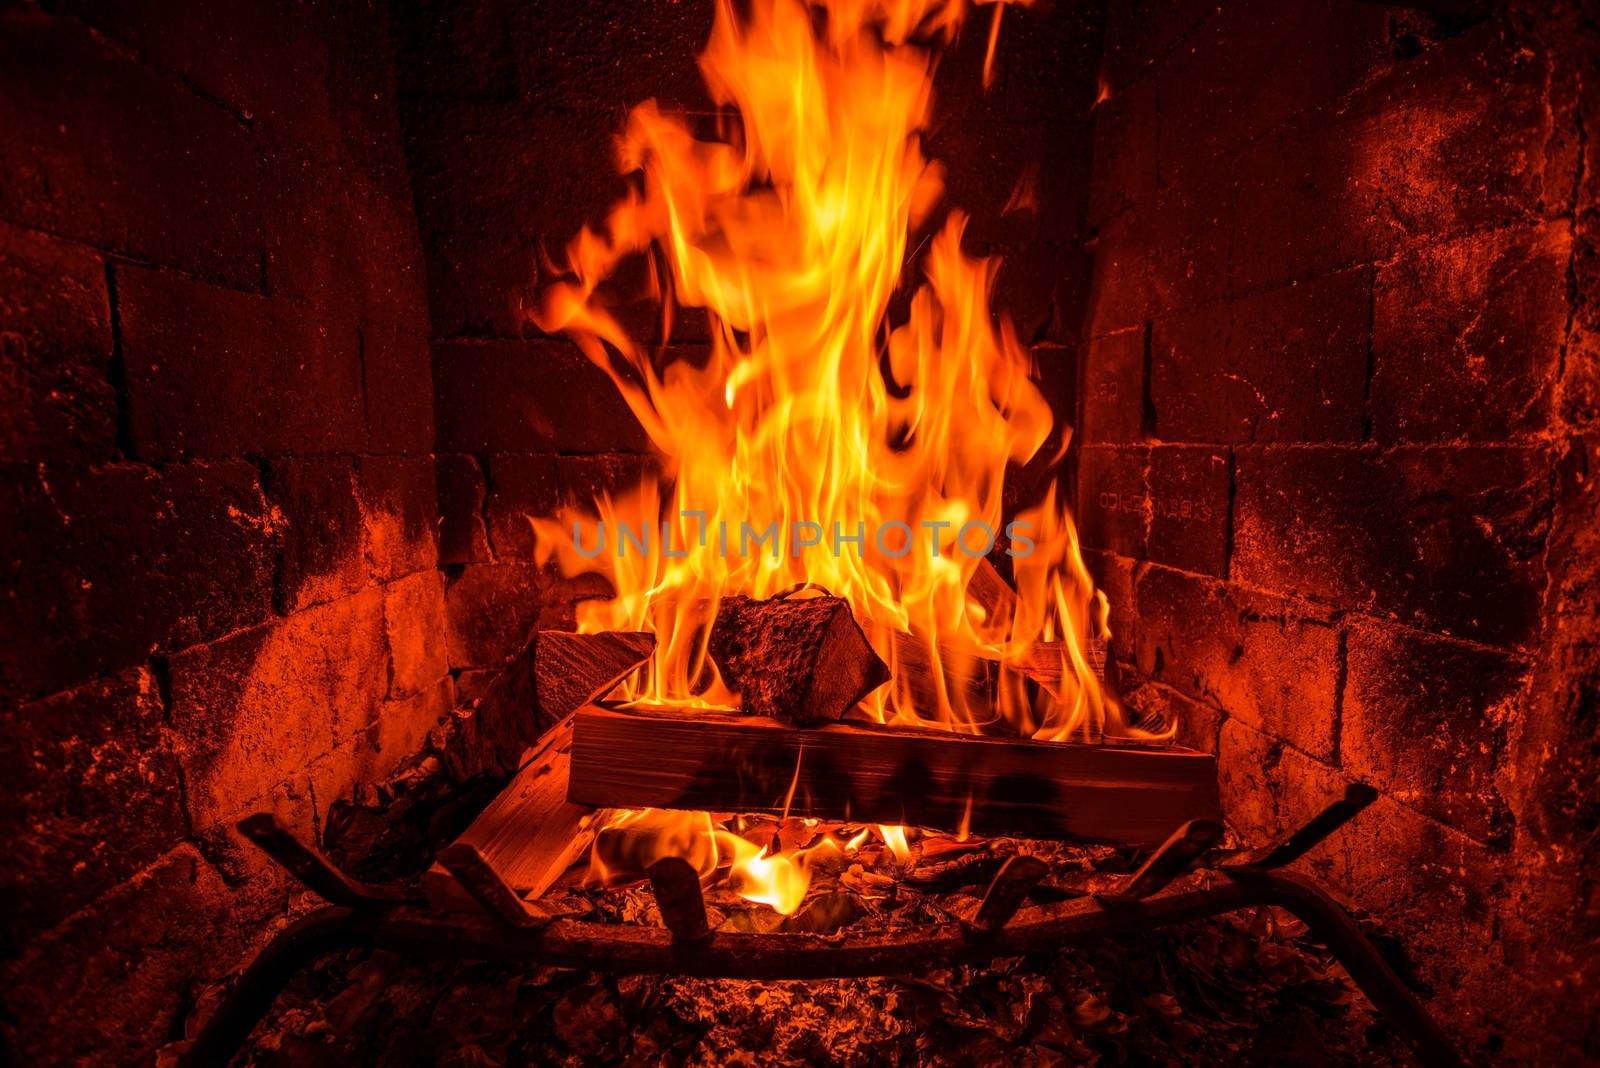 Fireplace Heat by welcomia